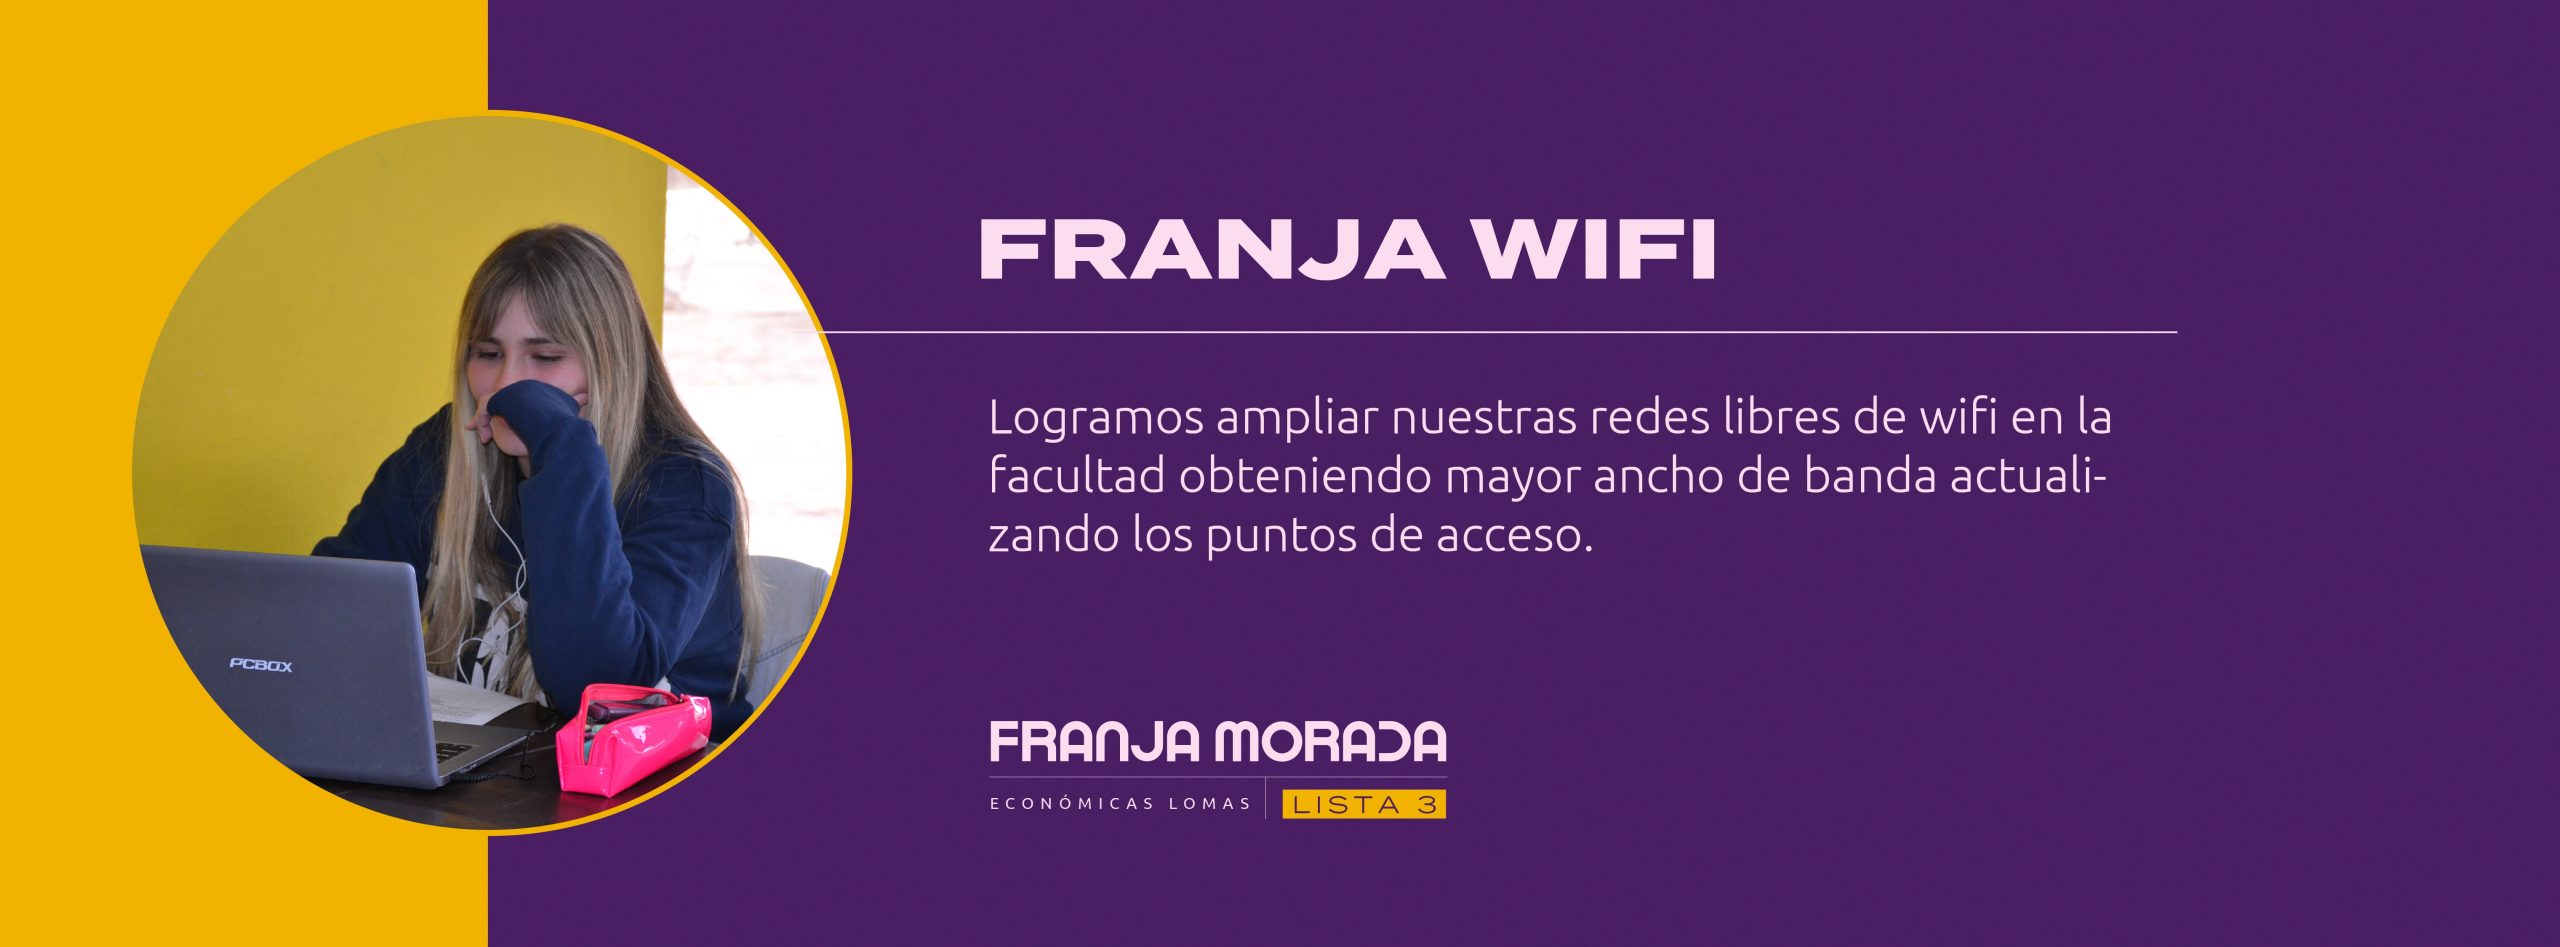 Franja WiFi-02-min